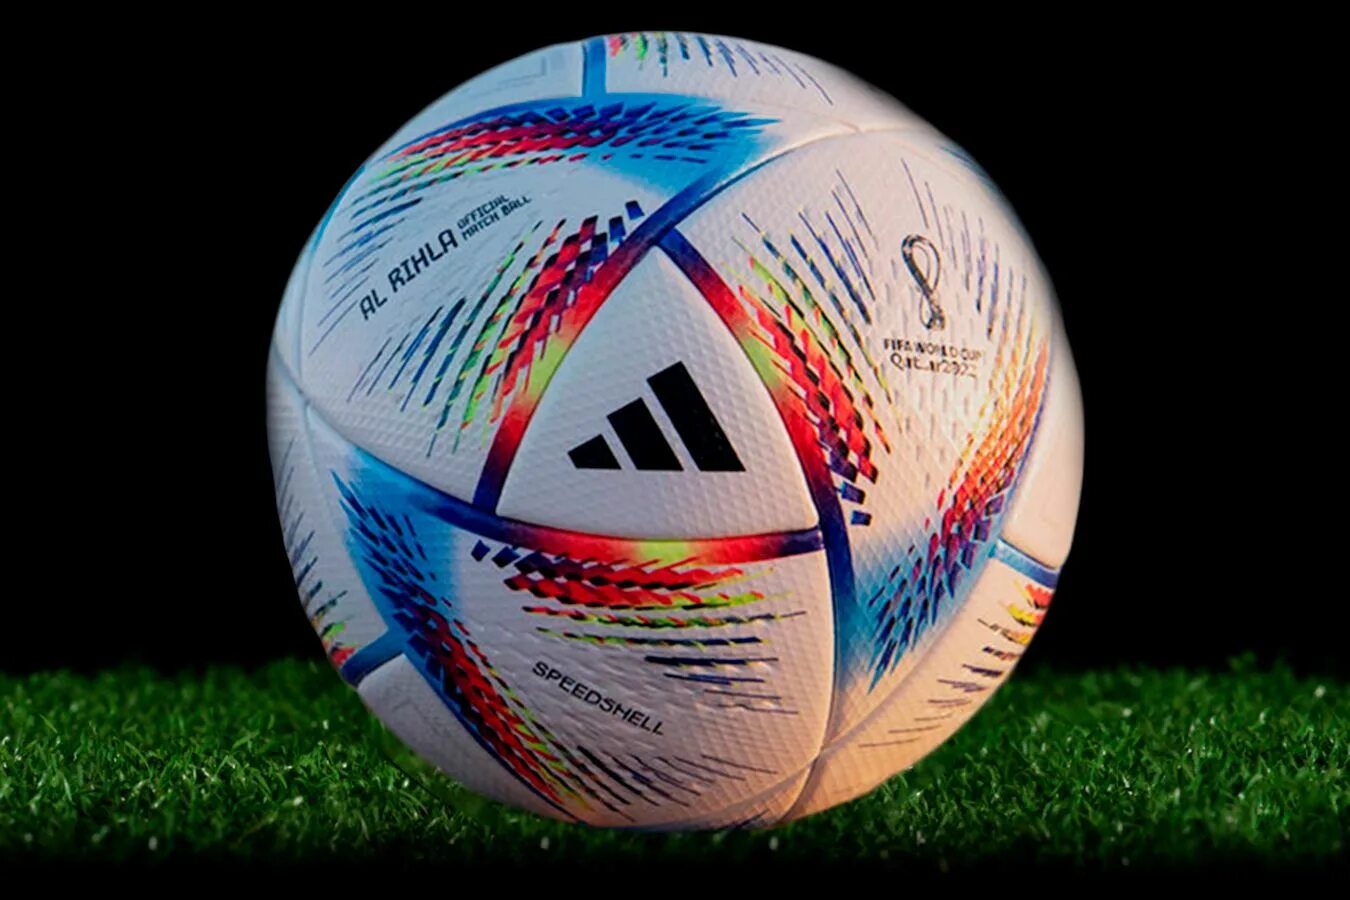 Ball 2022. Мяч адидас ЧМ 2022. Мяч FIFA World Qatar 2022 Cup adidas. Мяч адидас ЧМ 2022 Катар.